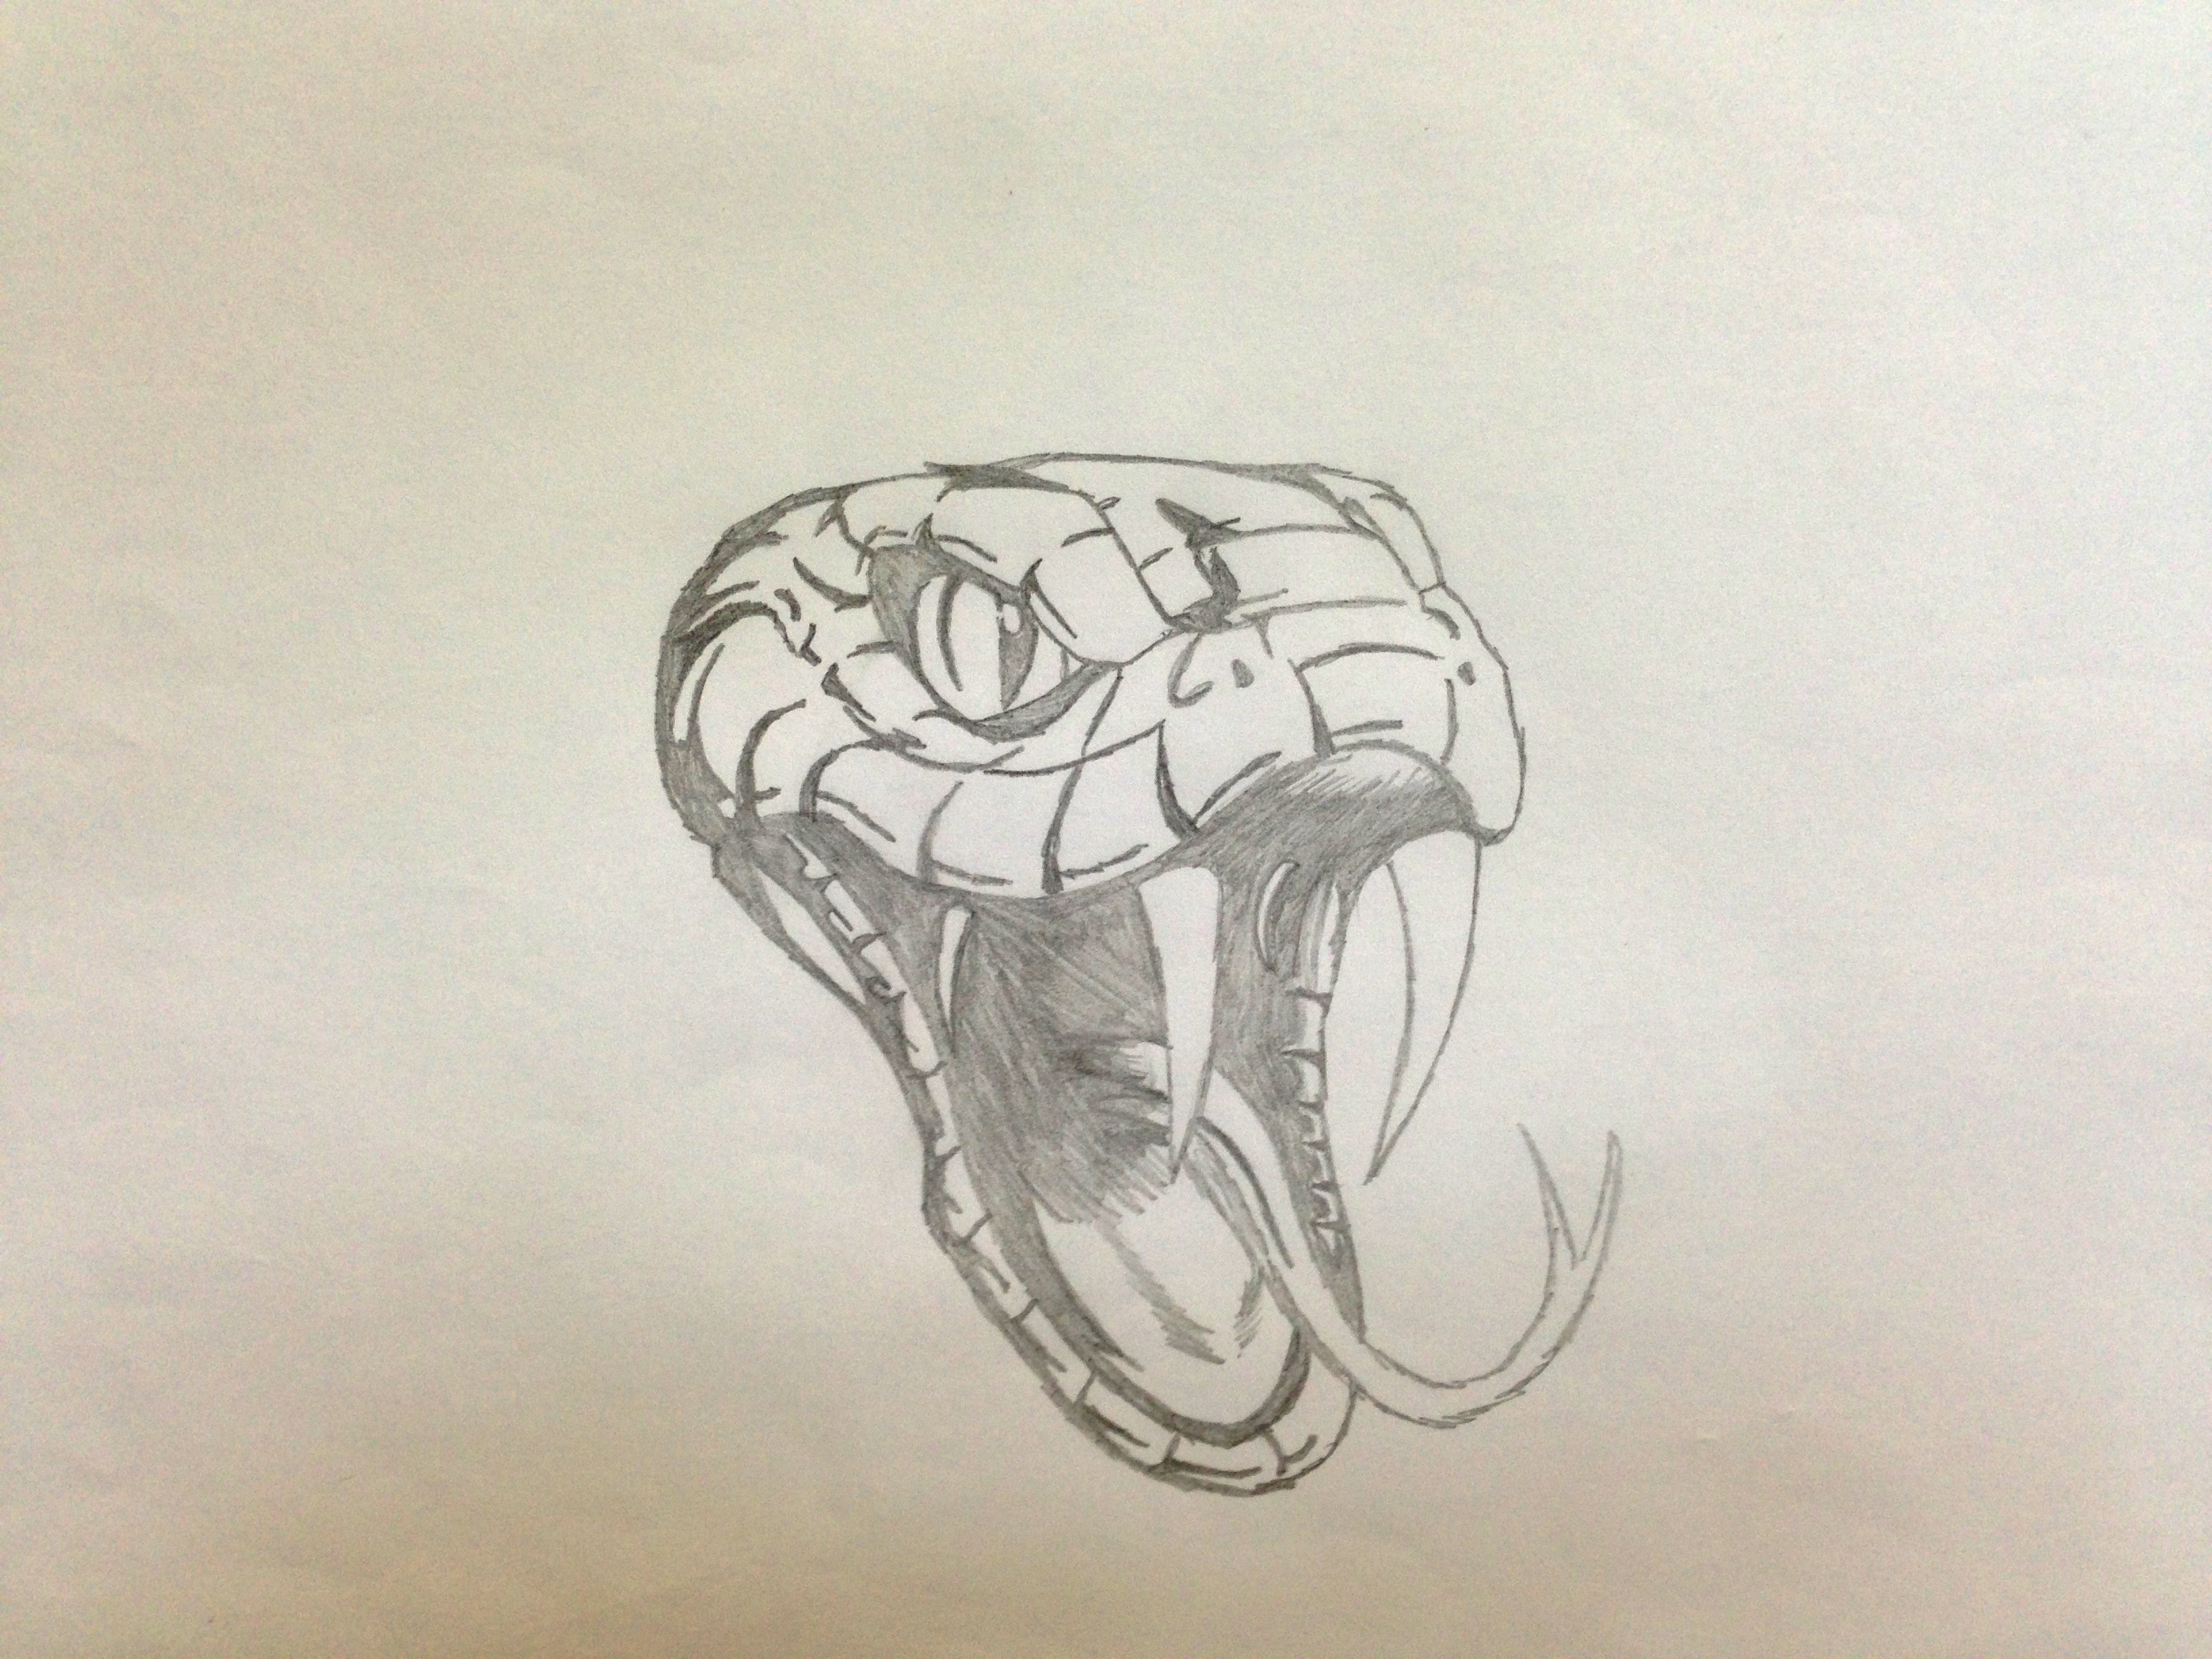 Голова змеи рисунок